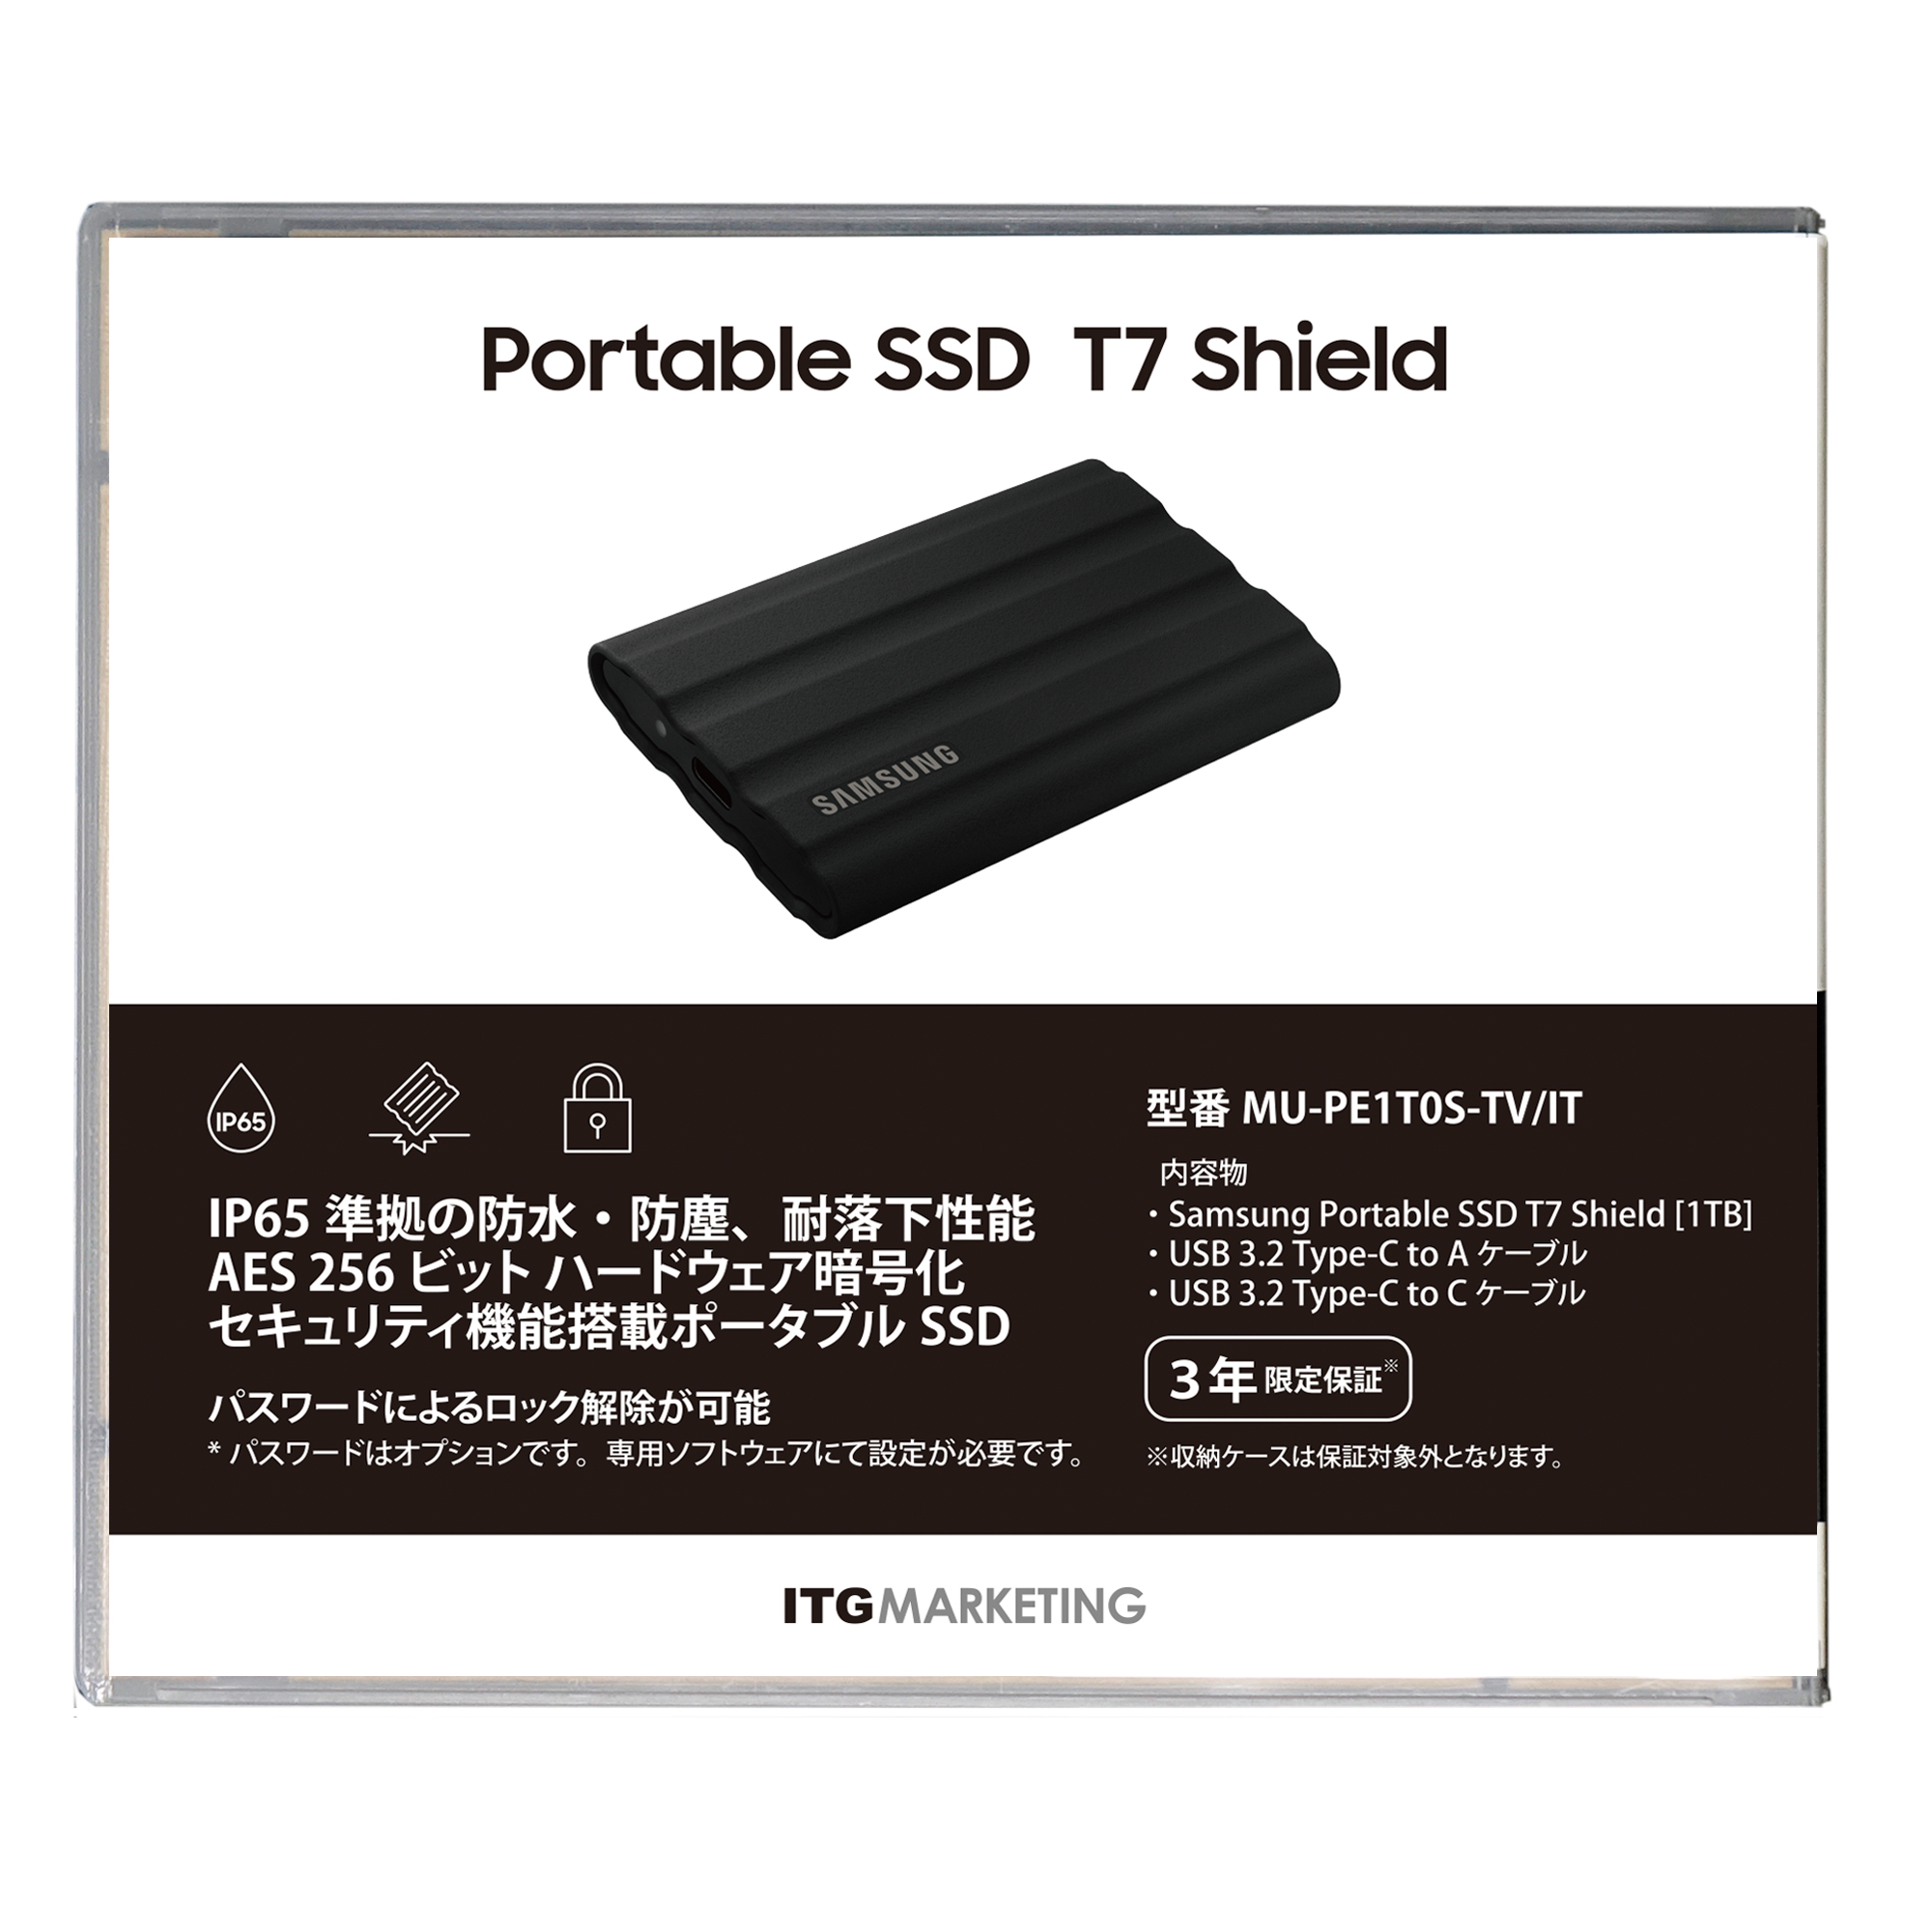 Portable SSD T7 Shield (1TB) 放送局向け専用ケース入りモデル